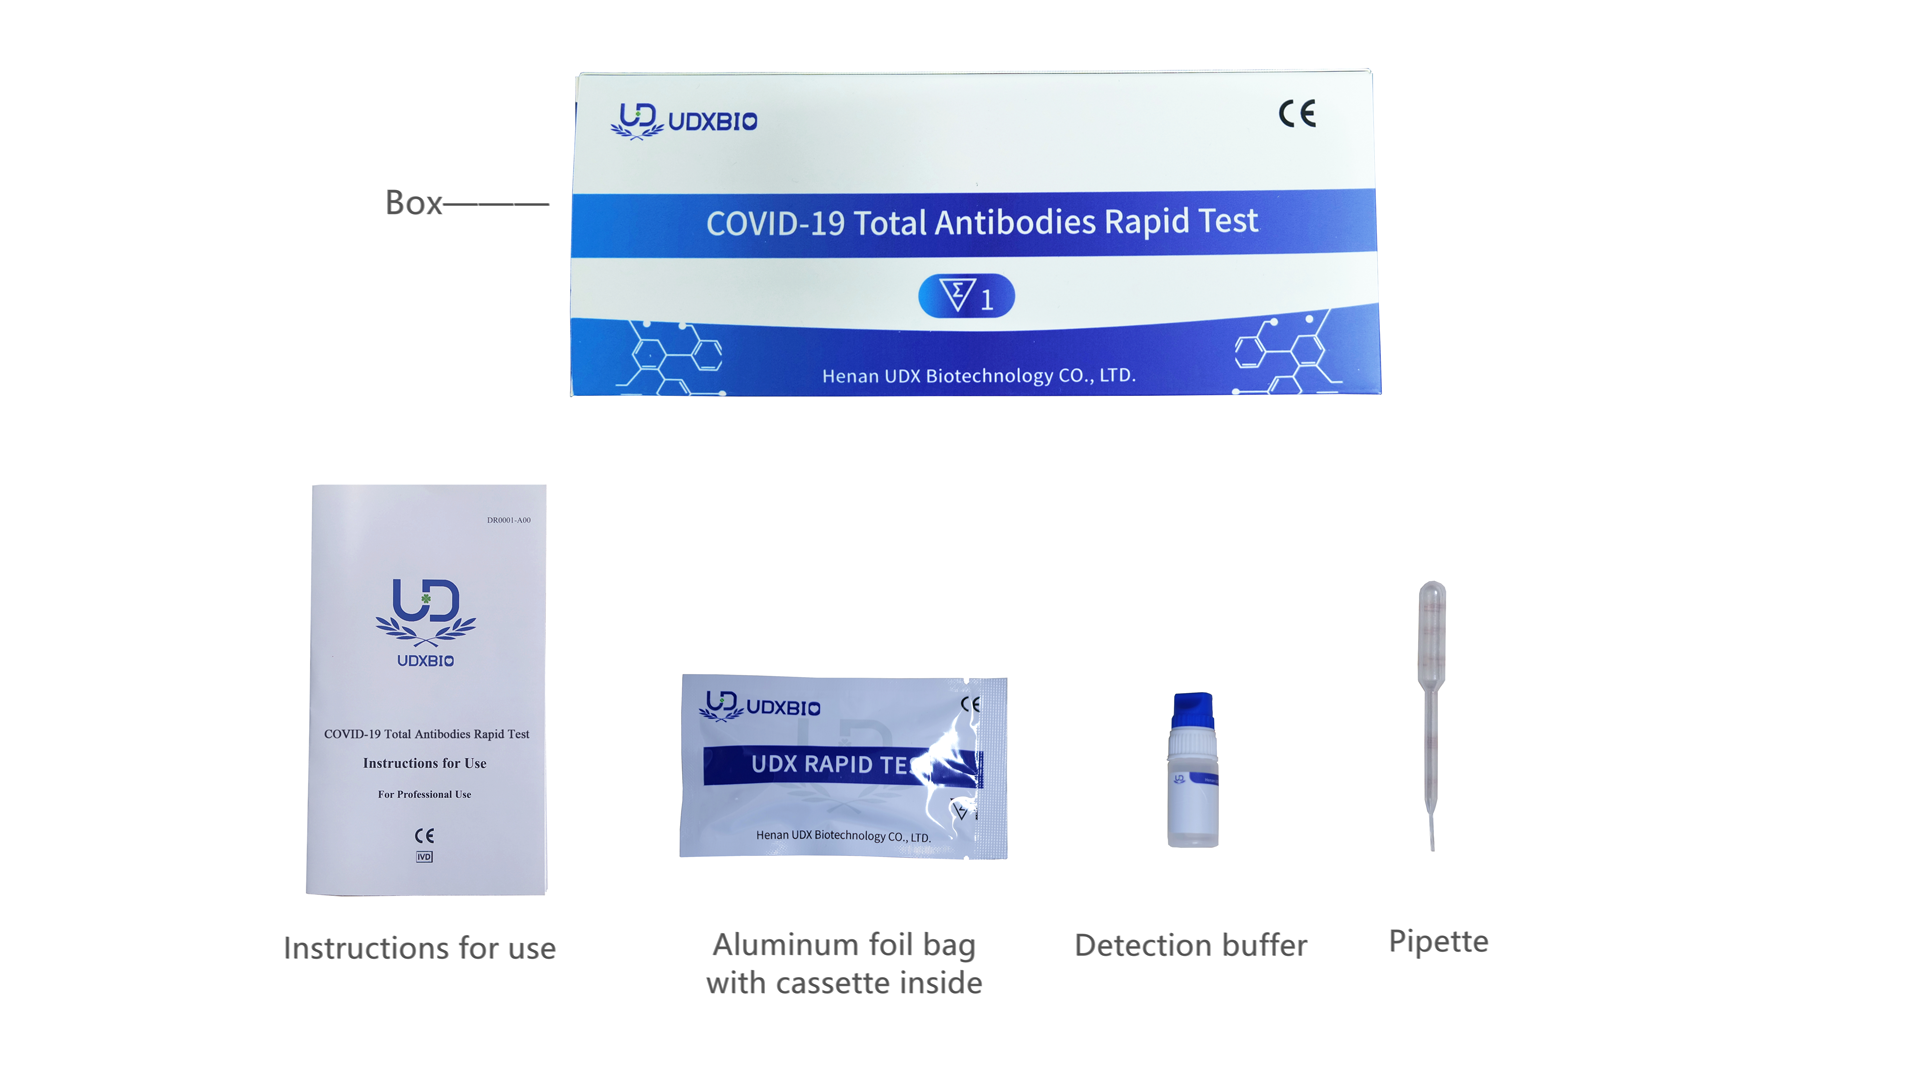 COVID-19 Total Antibodies Rapid Test